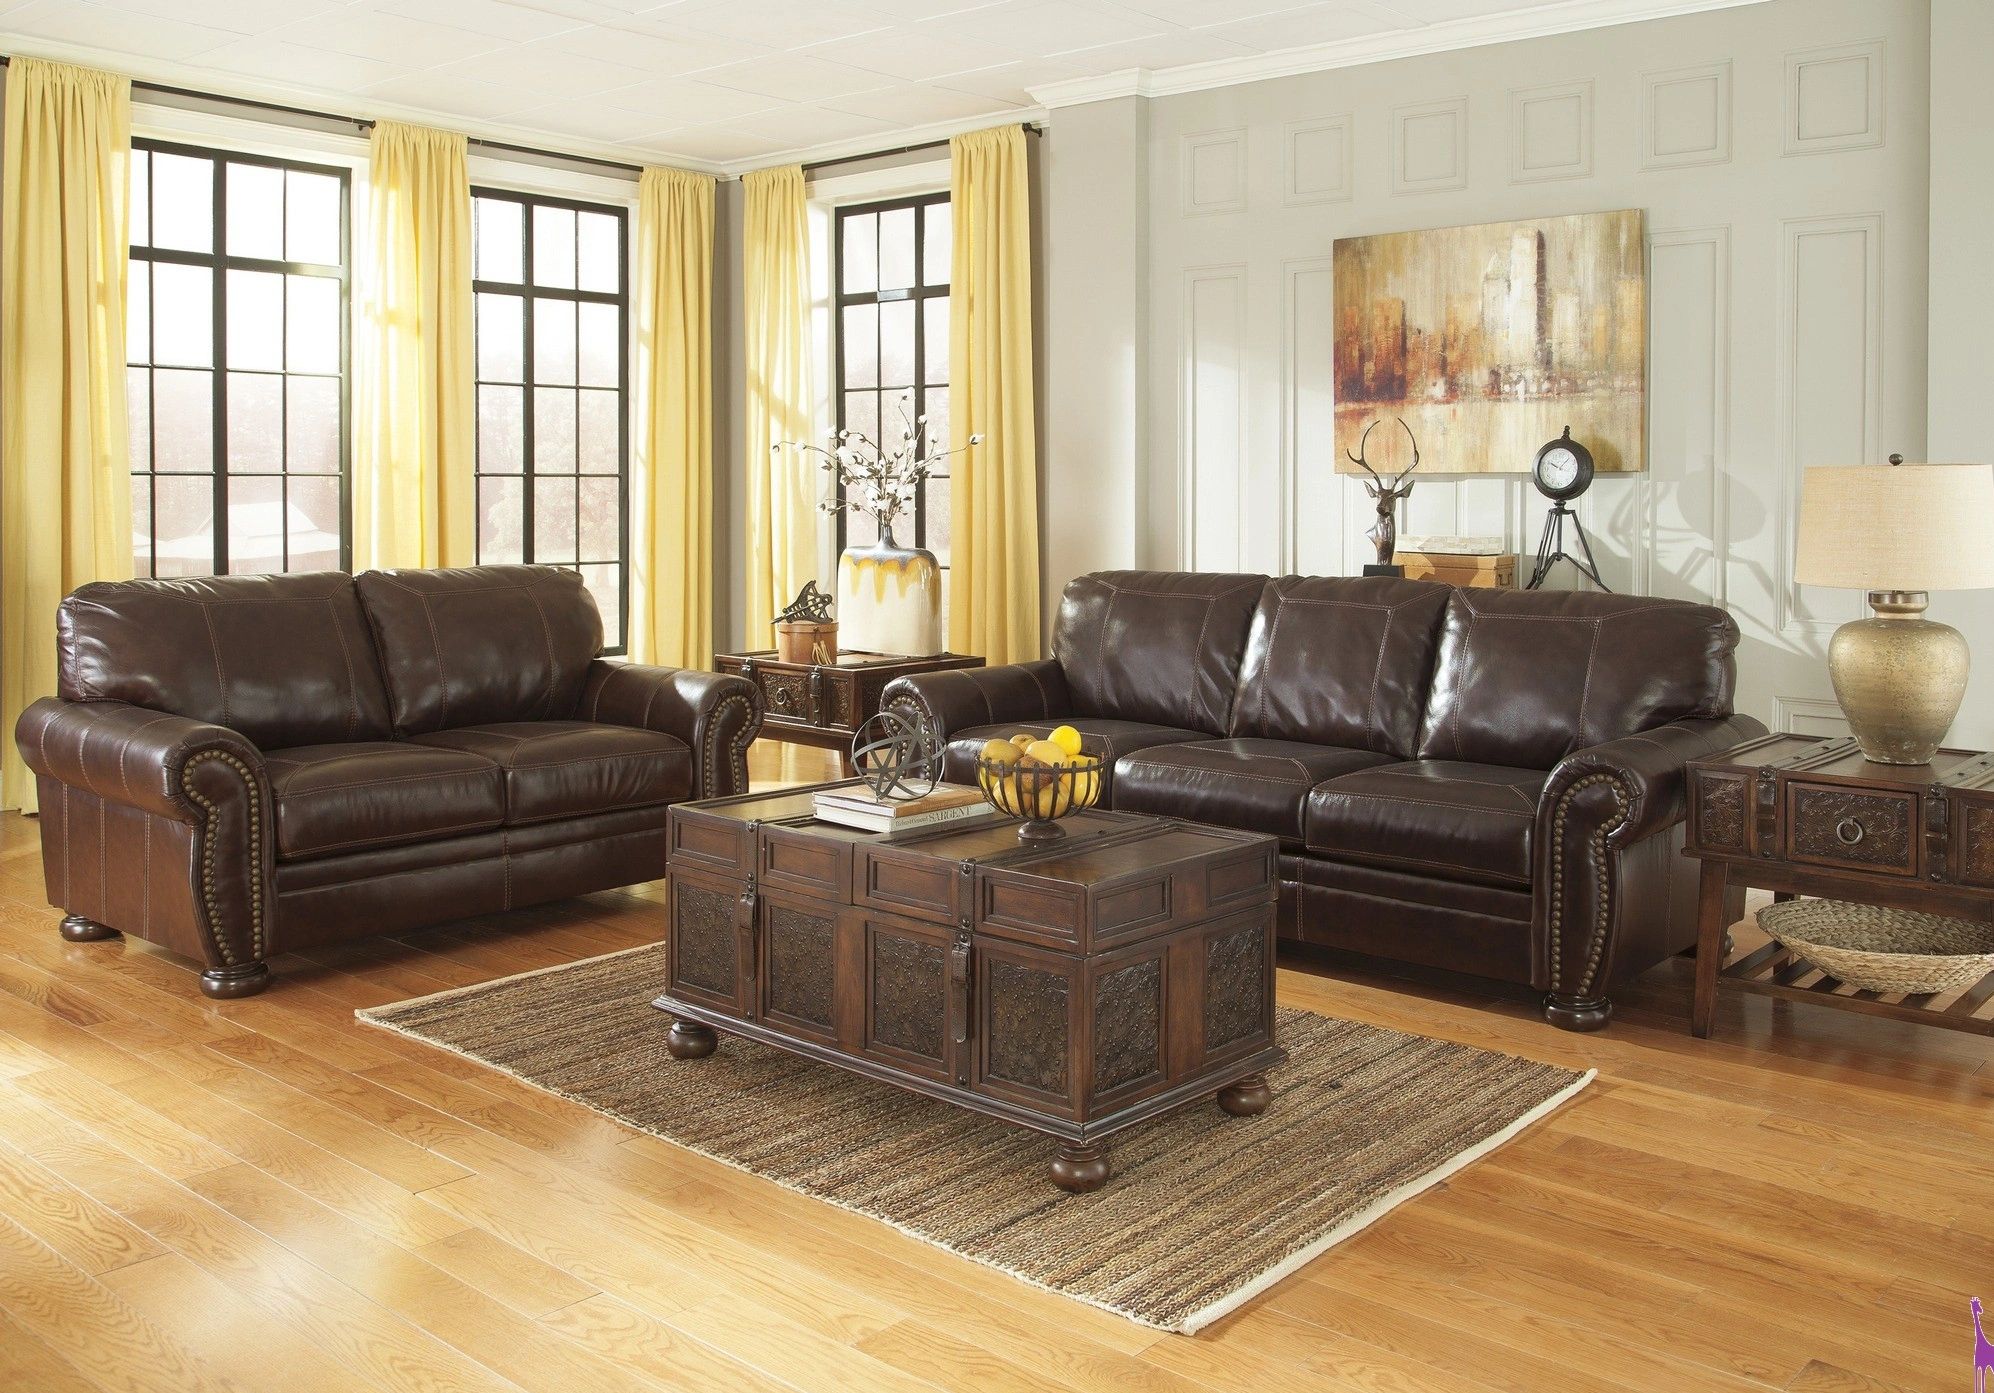 BANNER SOFA & LOVESEATS
COLOR: Coffee Leather Gel
Sofa:99" W x 39" D x 39" H
Loveseat:74"W x 39"D x 